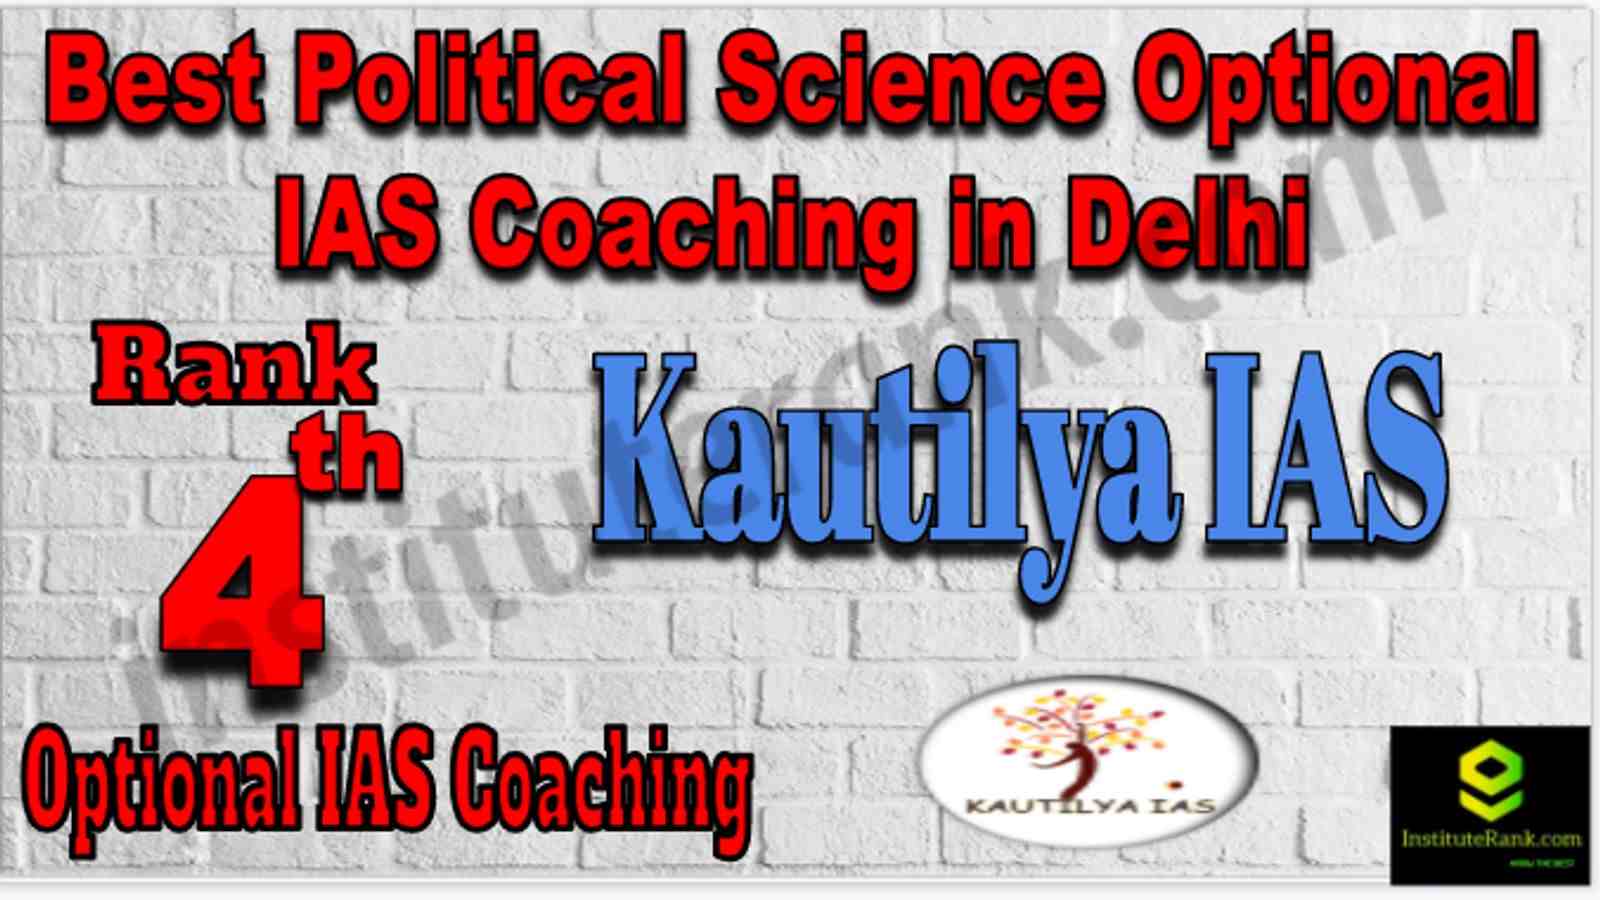 Rank 4 Best Political Science Optional IAS coachings in Delhi